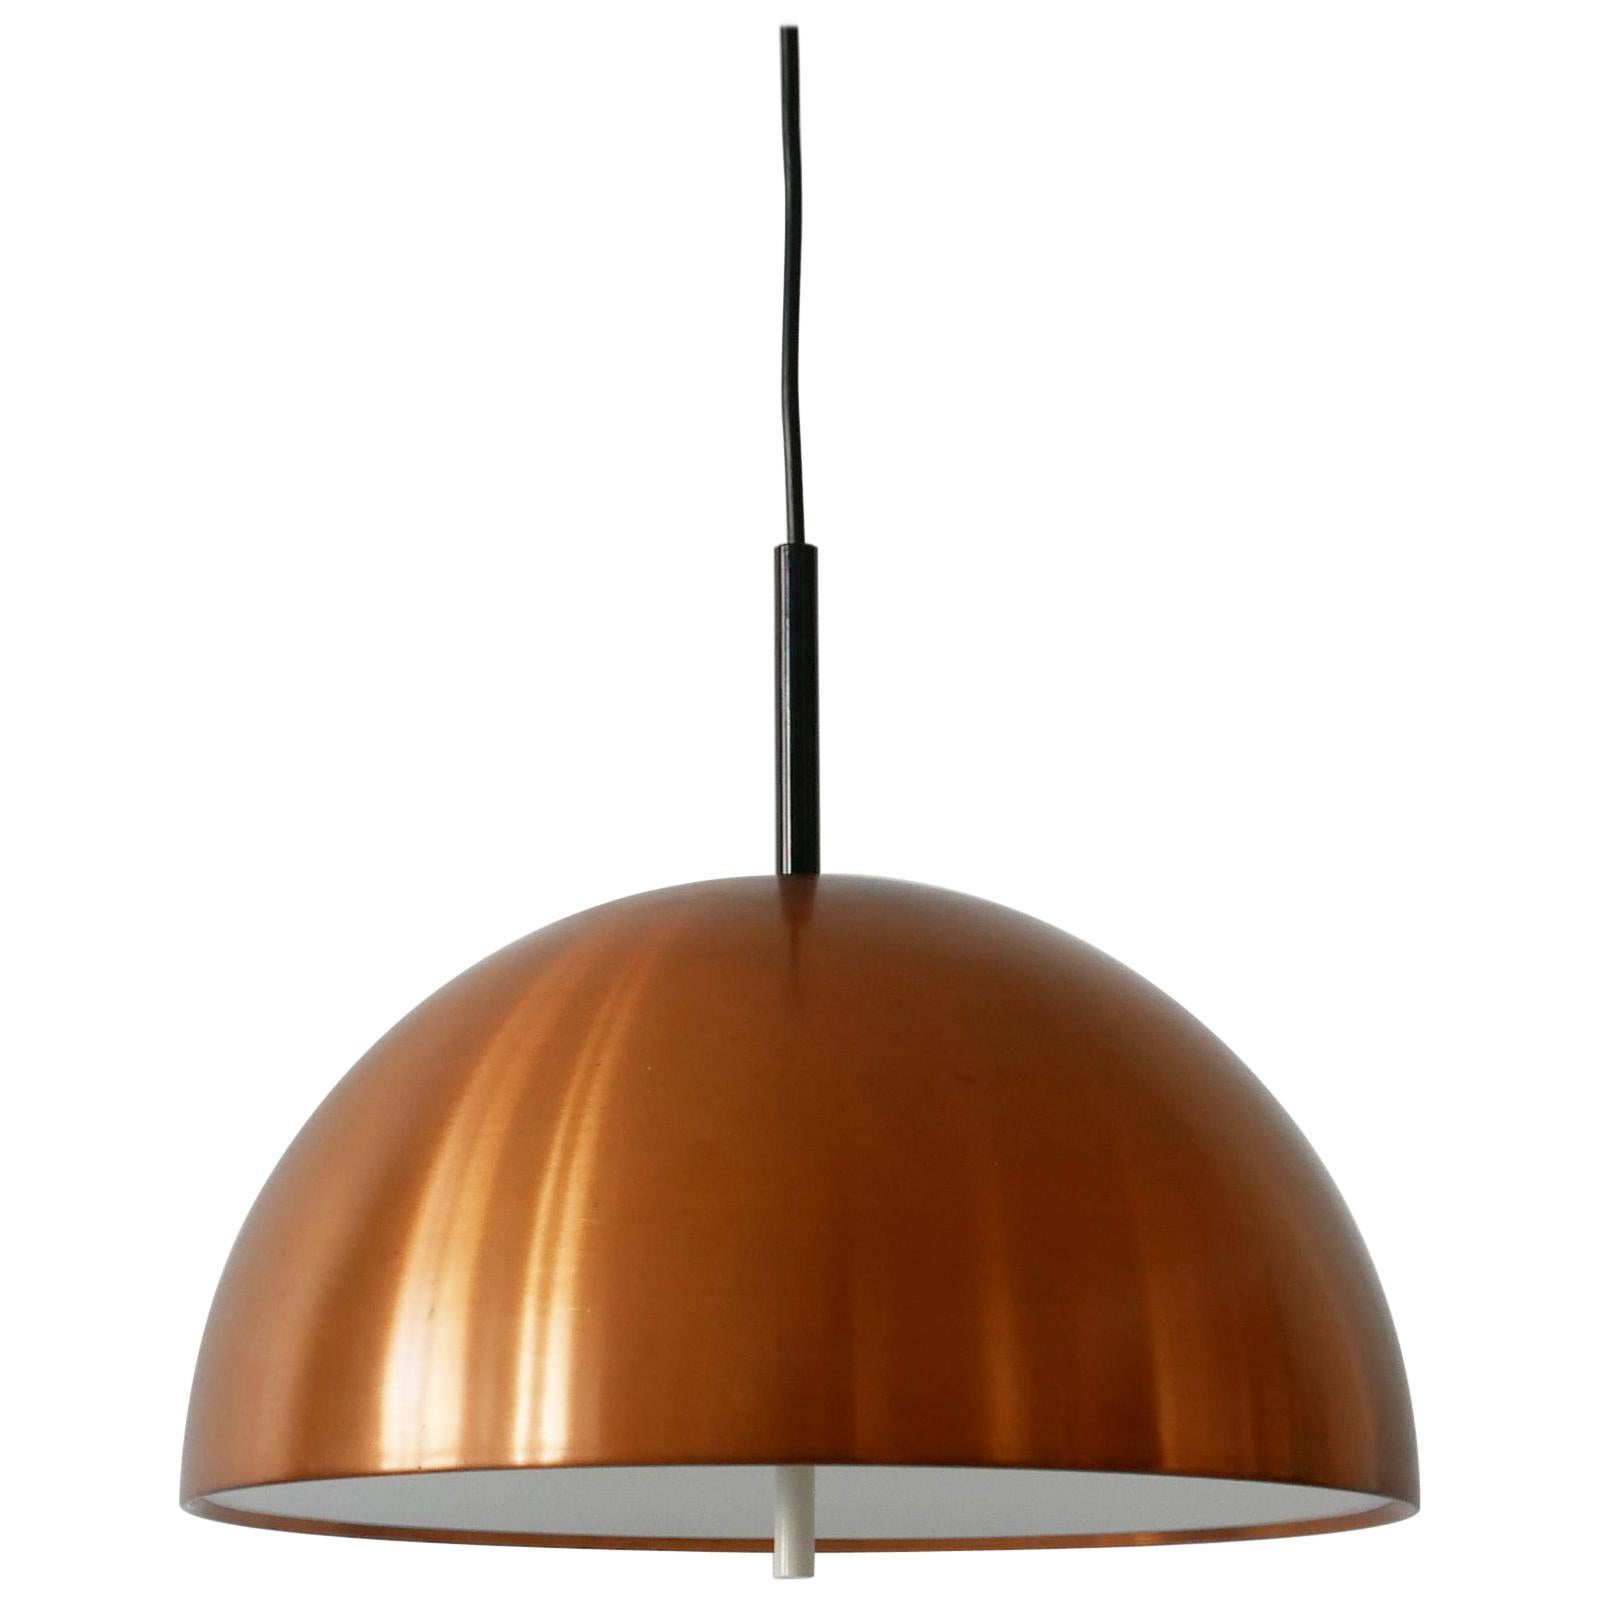 Elegant Mid-Century Modern Copper Pendant Lamp by Staff & Schwarz 1960s, Germany